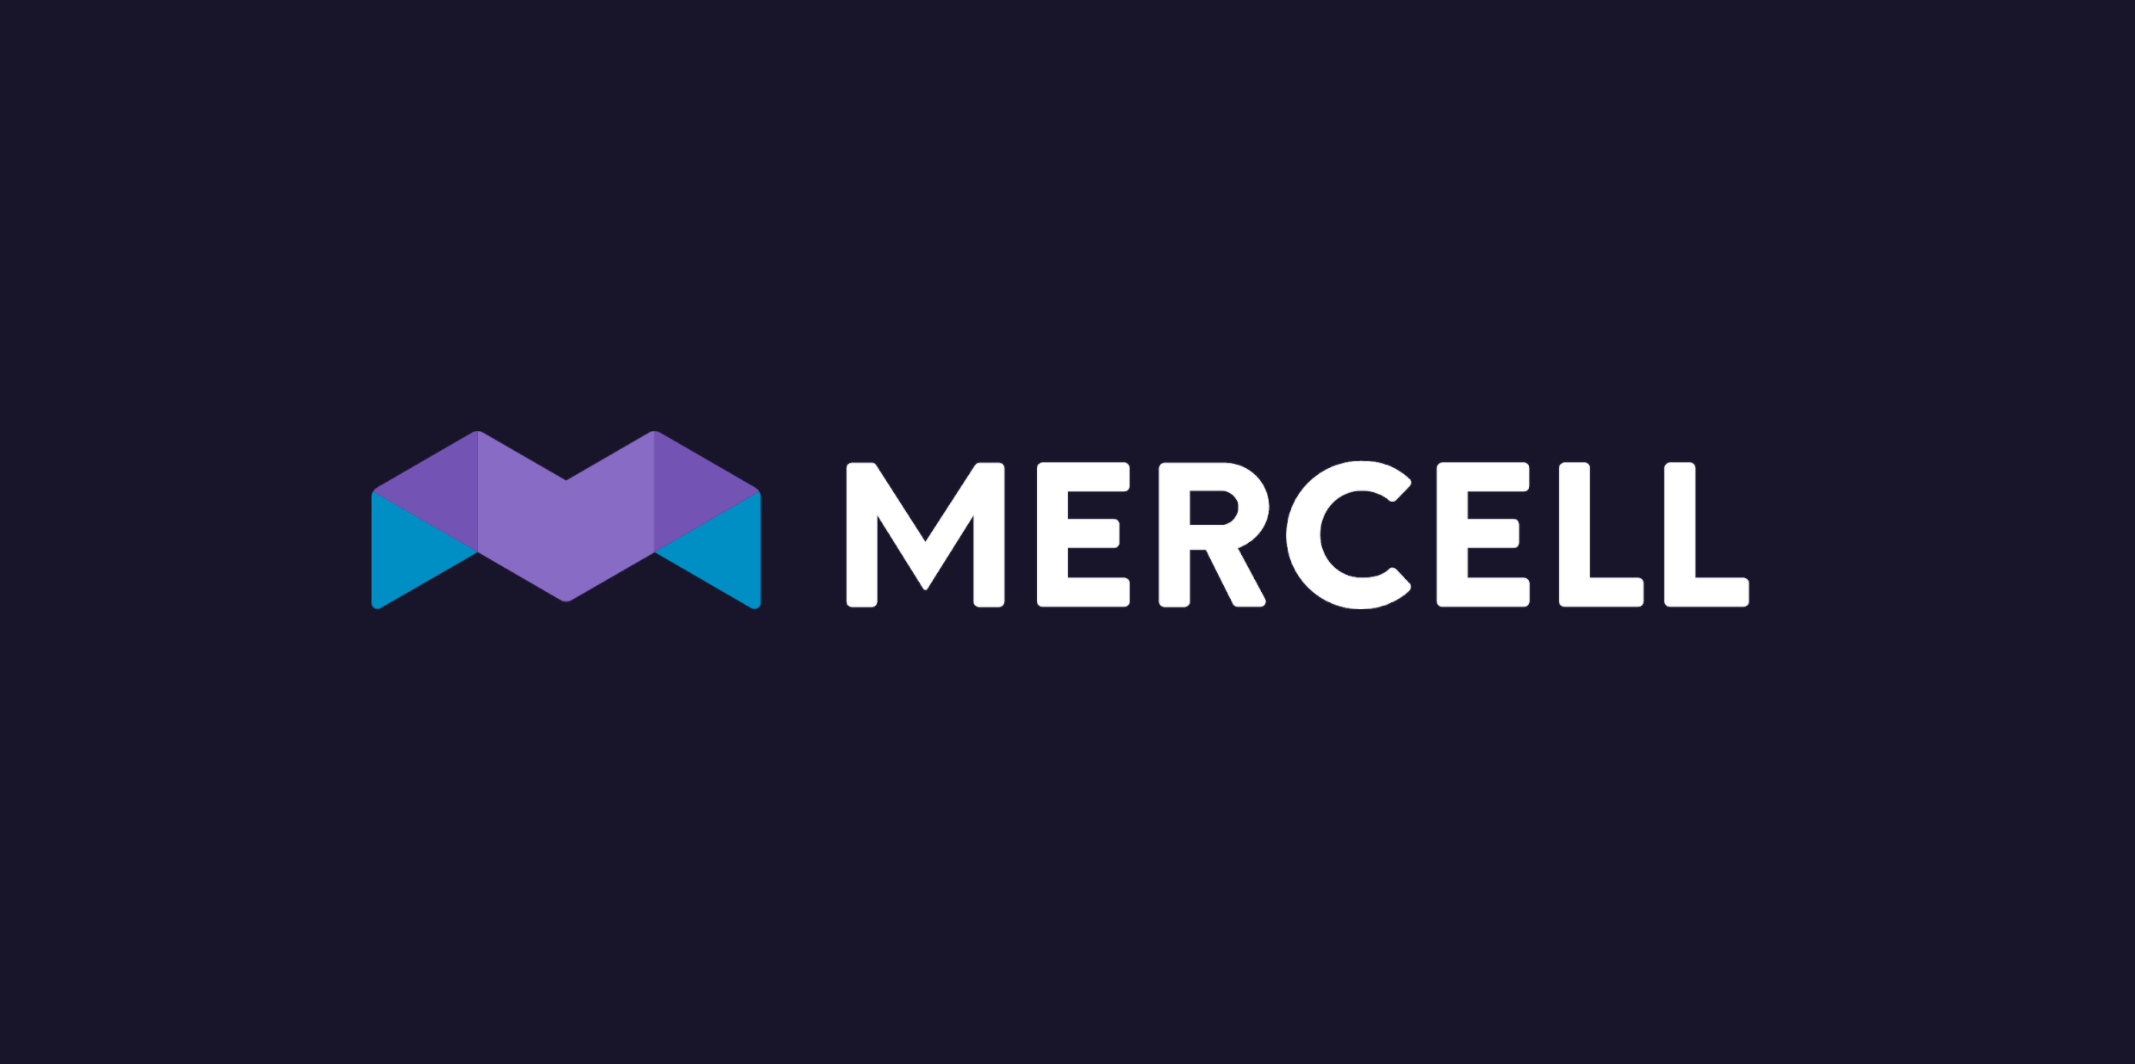 Mercell logo with dark background